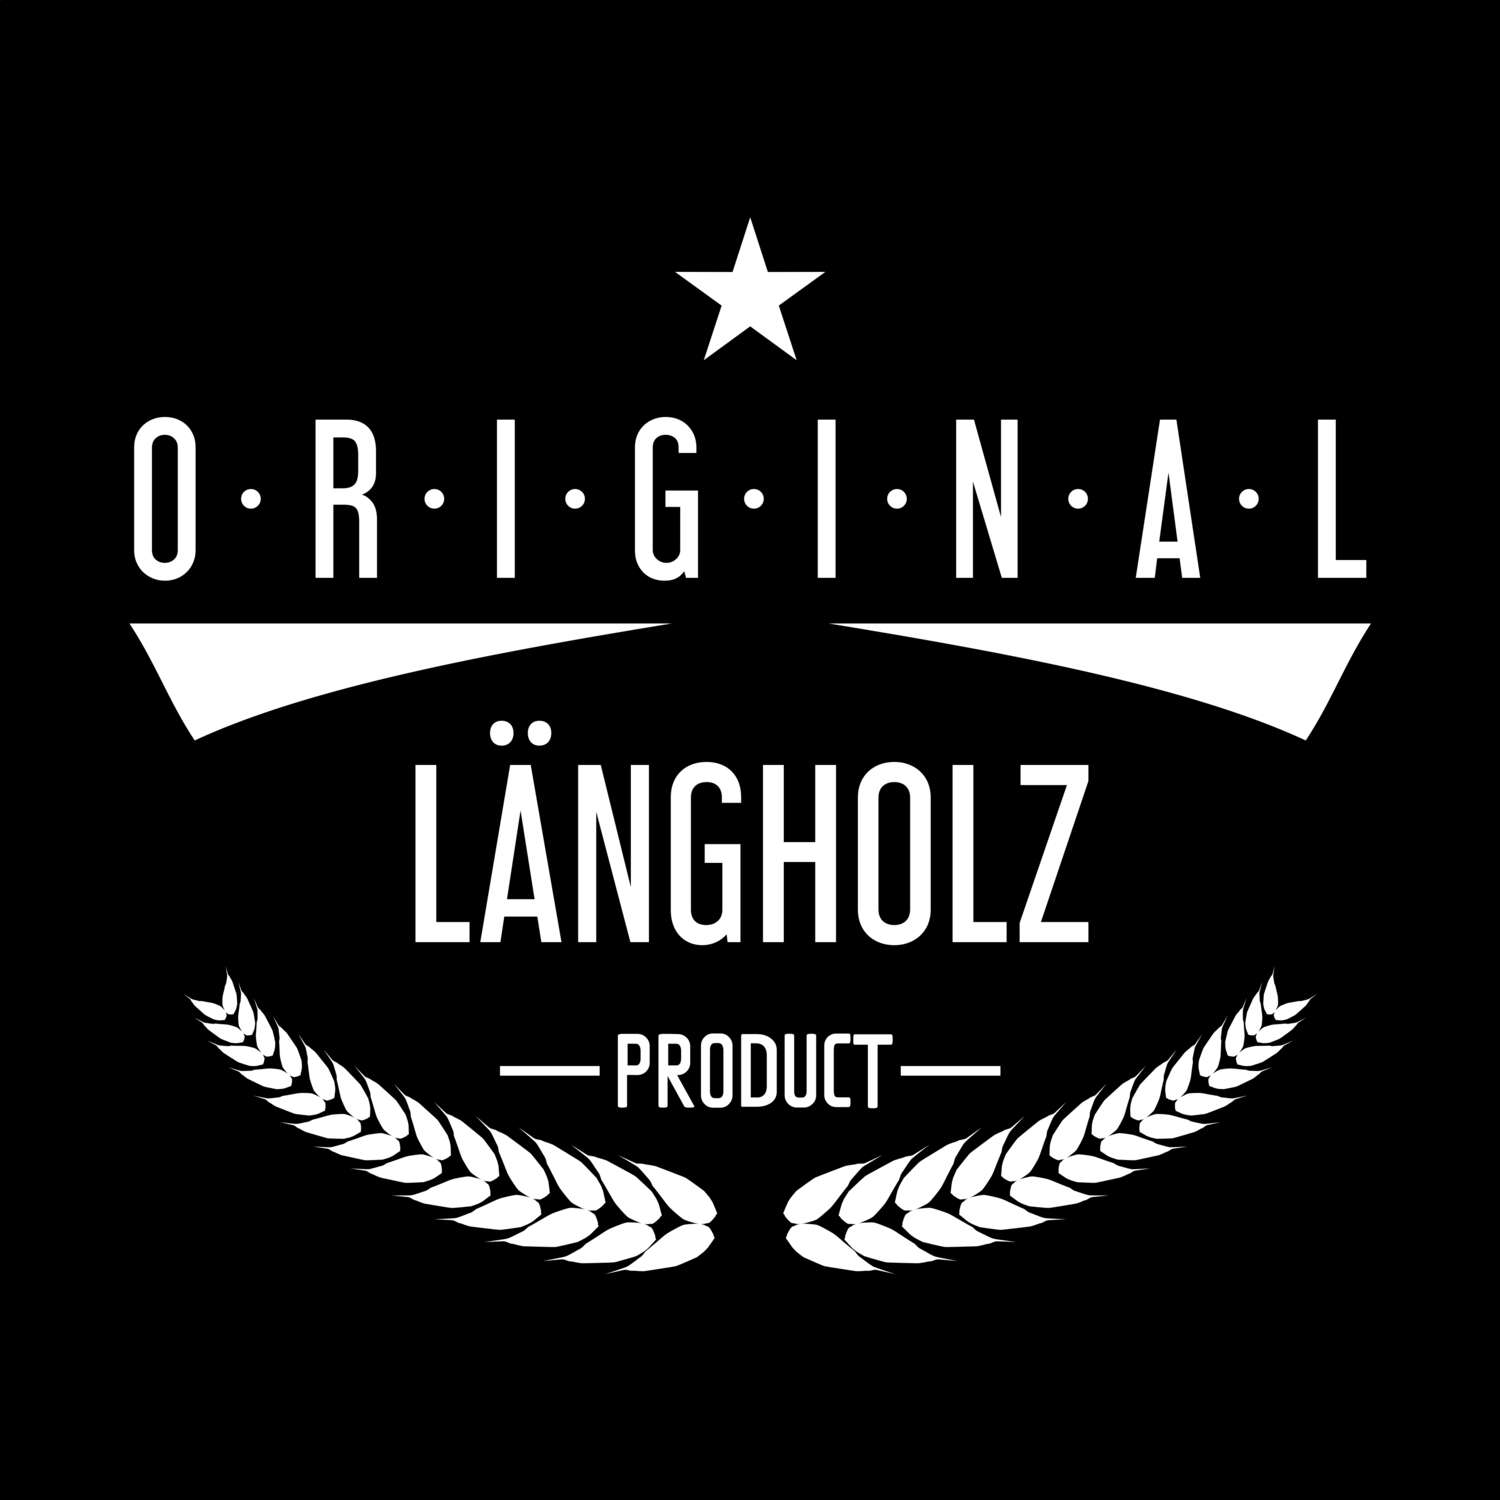 Längholz T-Shirt »Original Product«